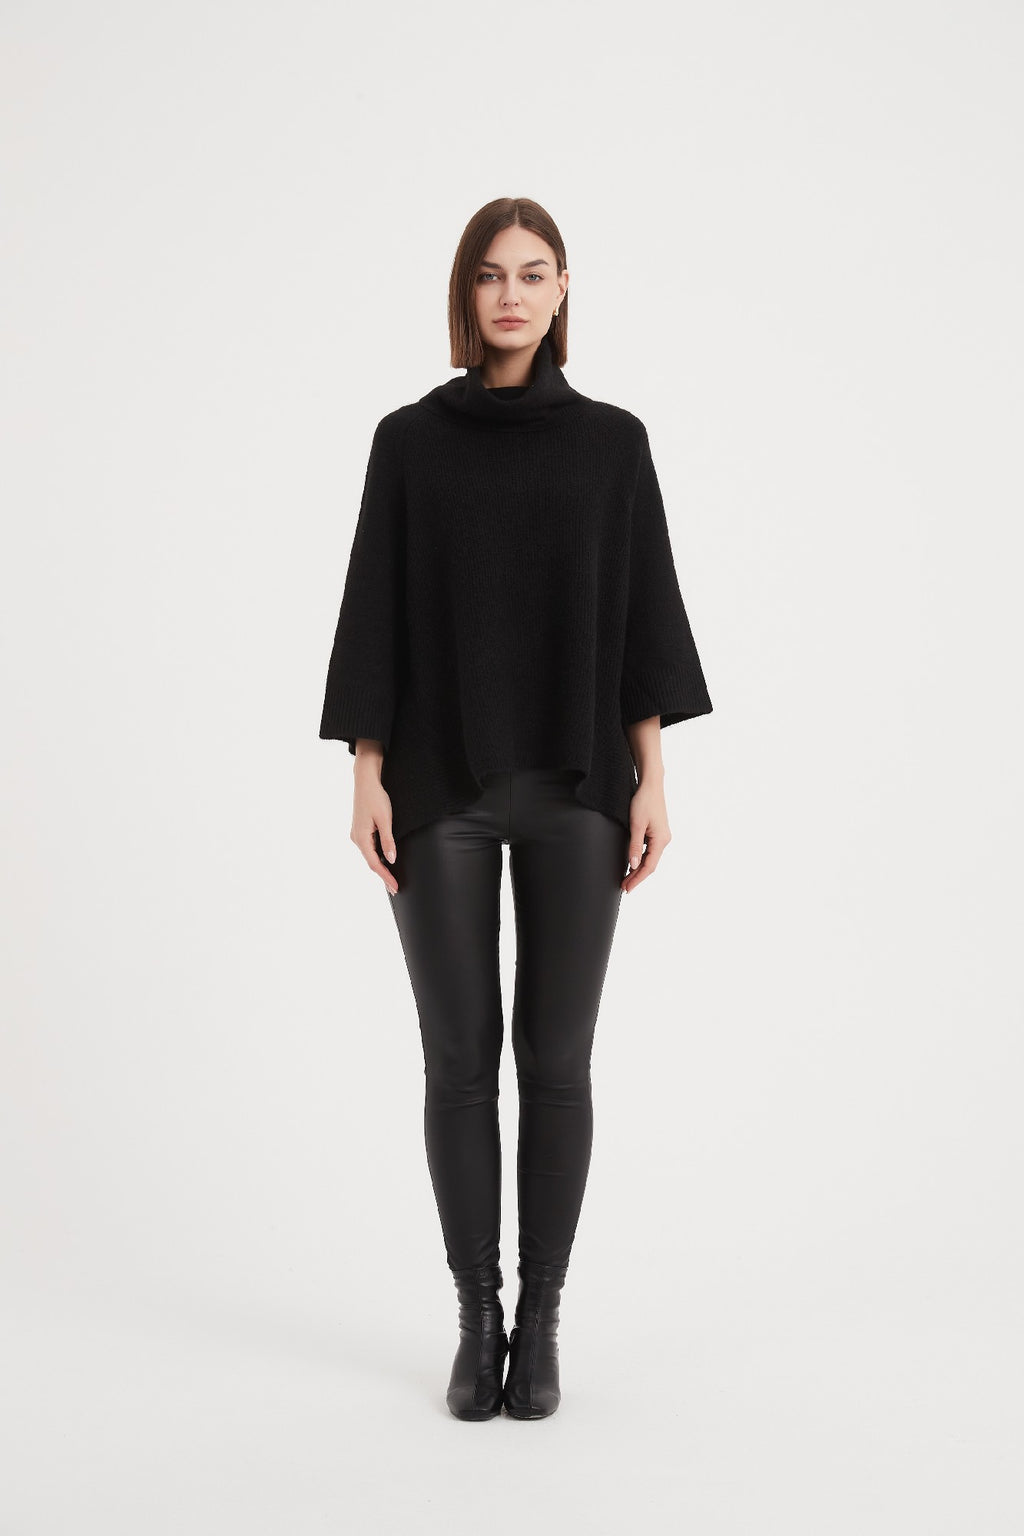 Tirelli Half Sleeve Pullover - Black [CLR:BLACK SZ:S/M]